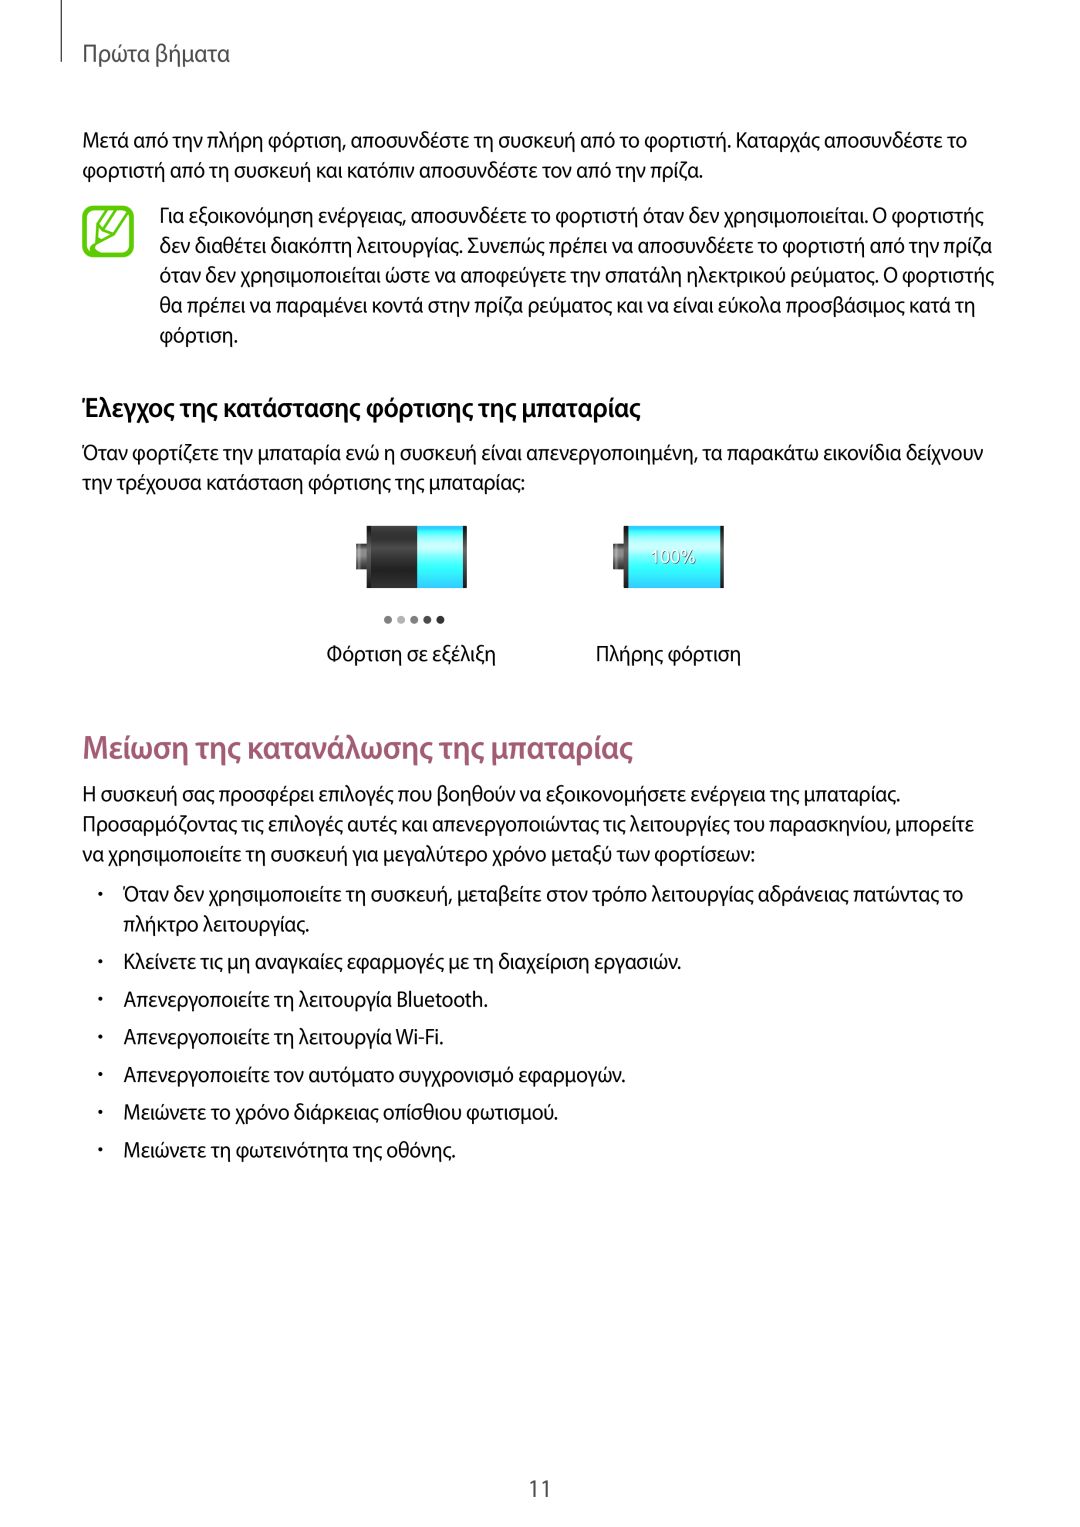 Samsung GT-P5210ZWAEUR Μείωση της κατανάλωσης της μπαταρίας, Έλεγχος της κατάστασης φόρτισης της μπαταρίας, Πρώτα βήματα 